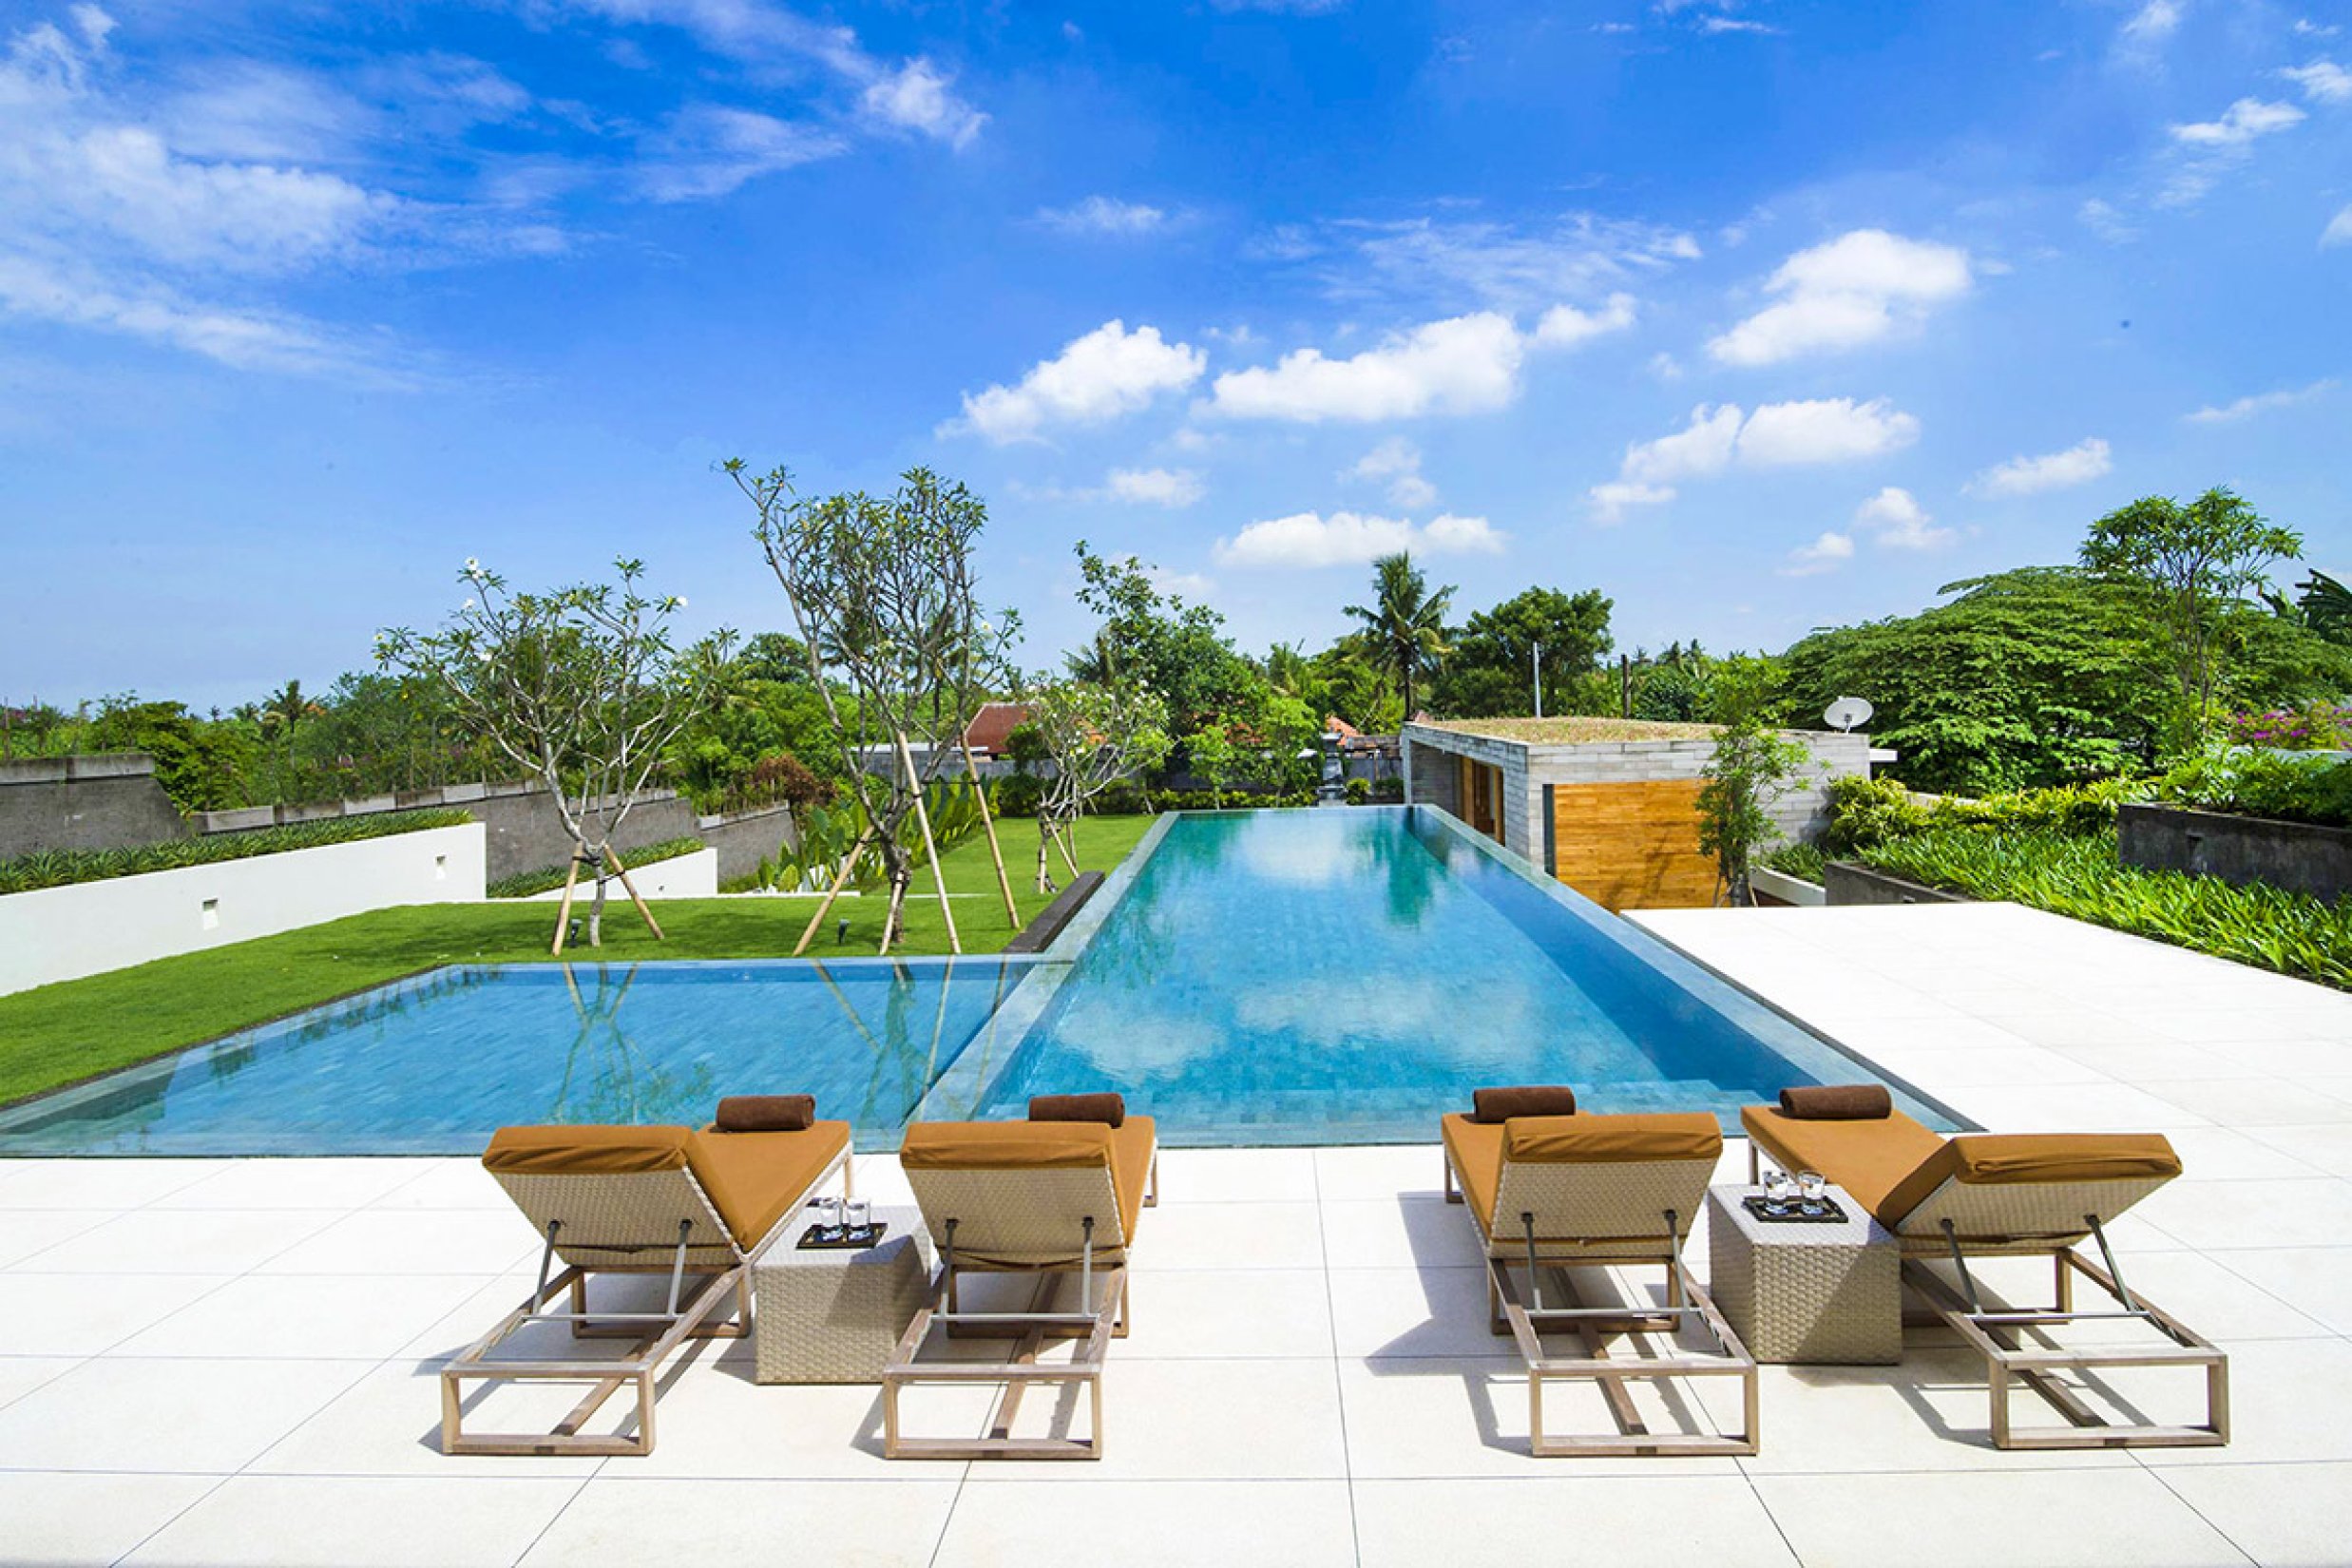 The Iman Villa Bali